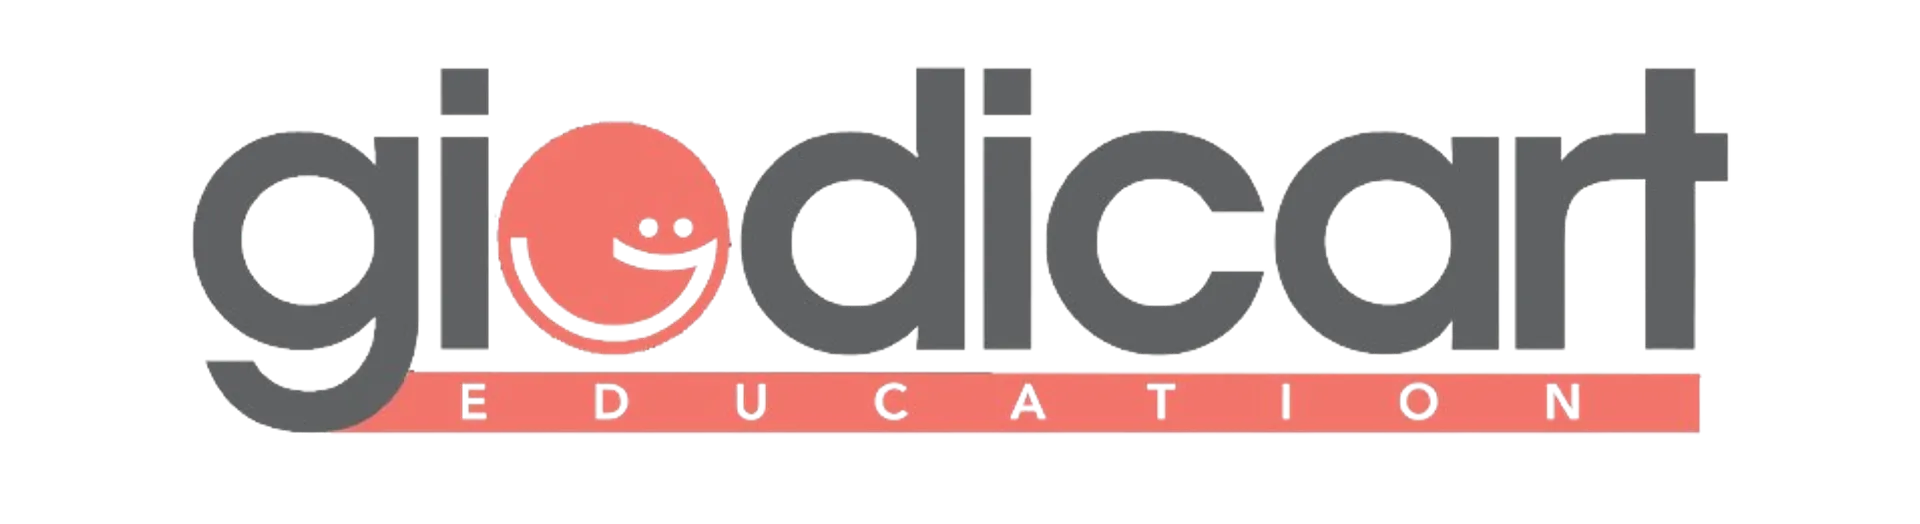 GIODICART logo